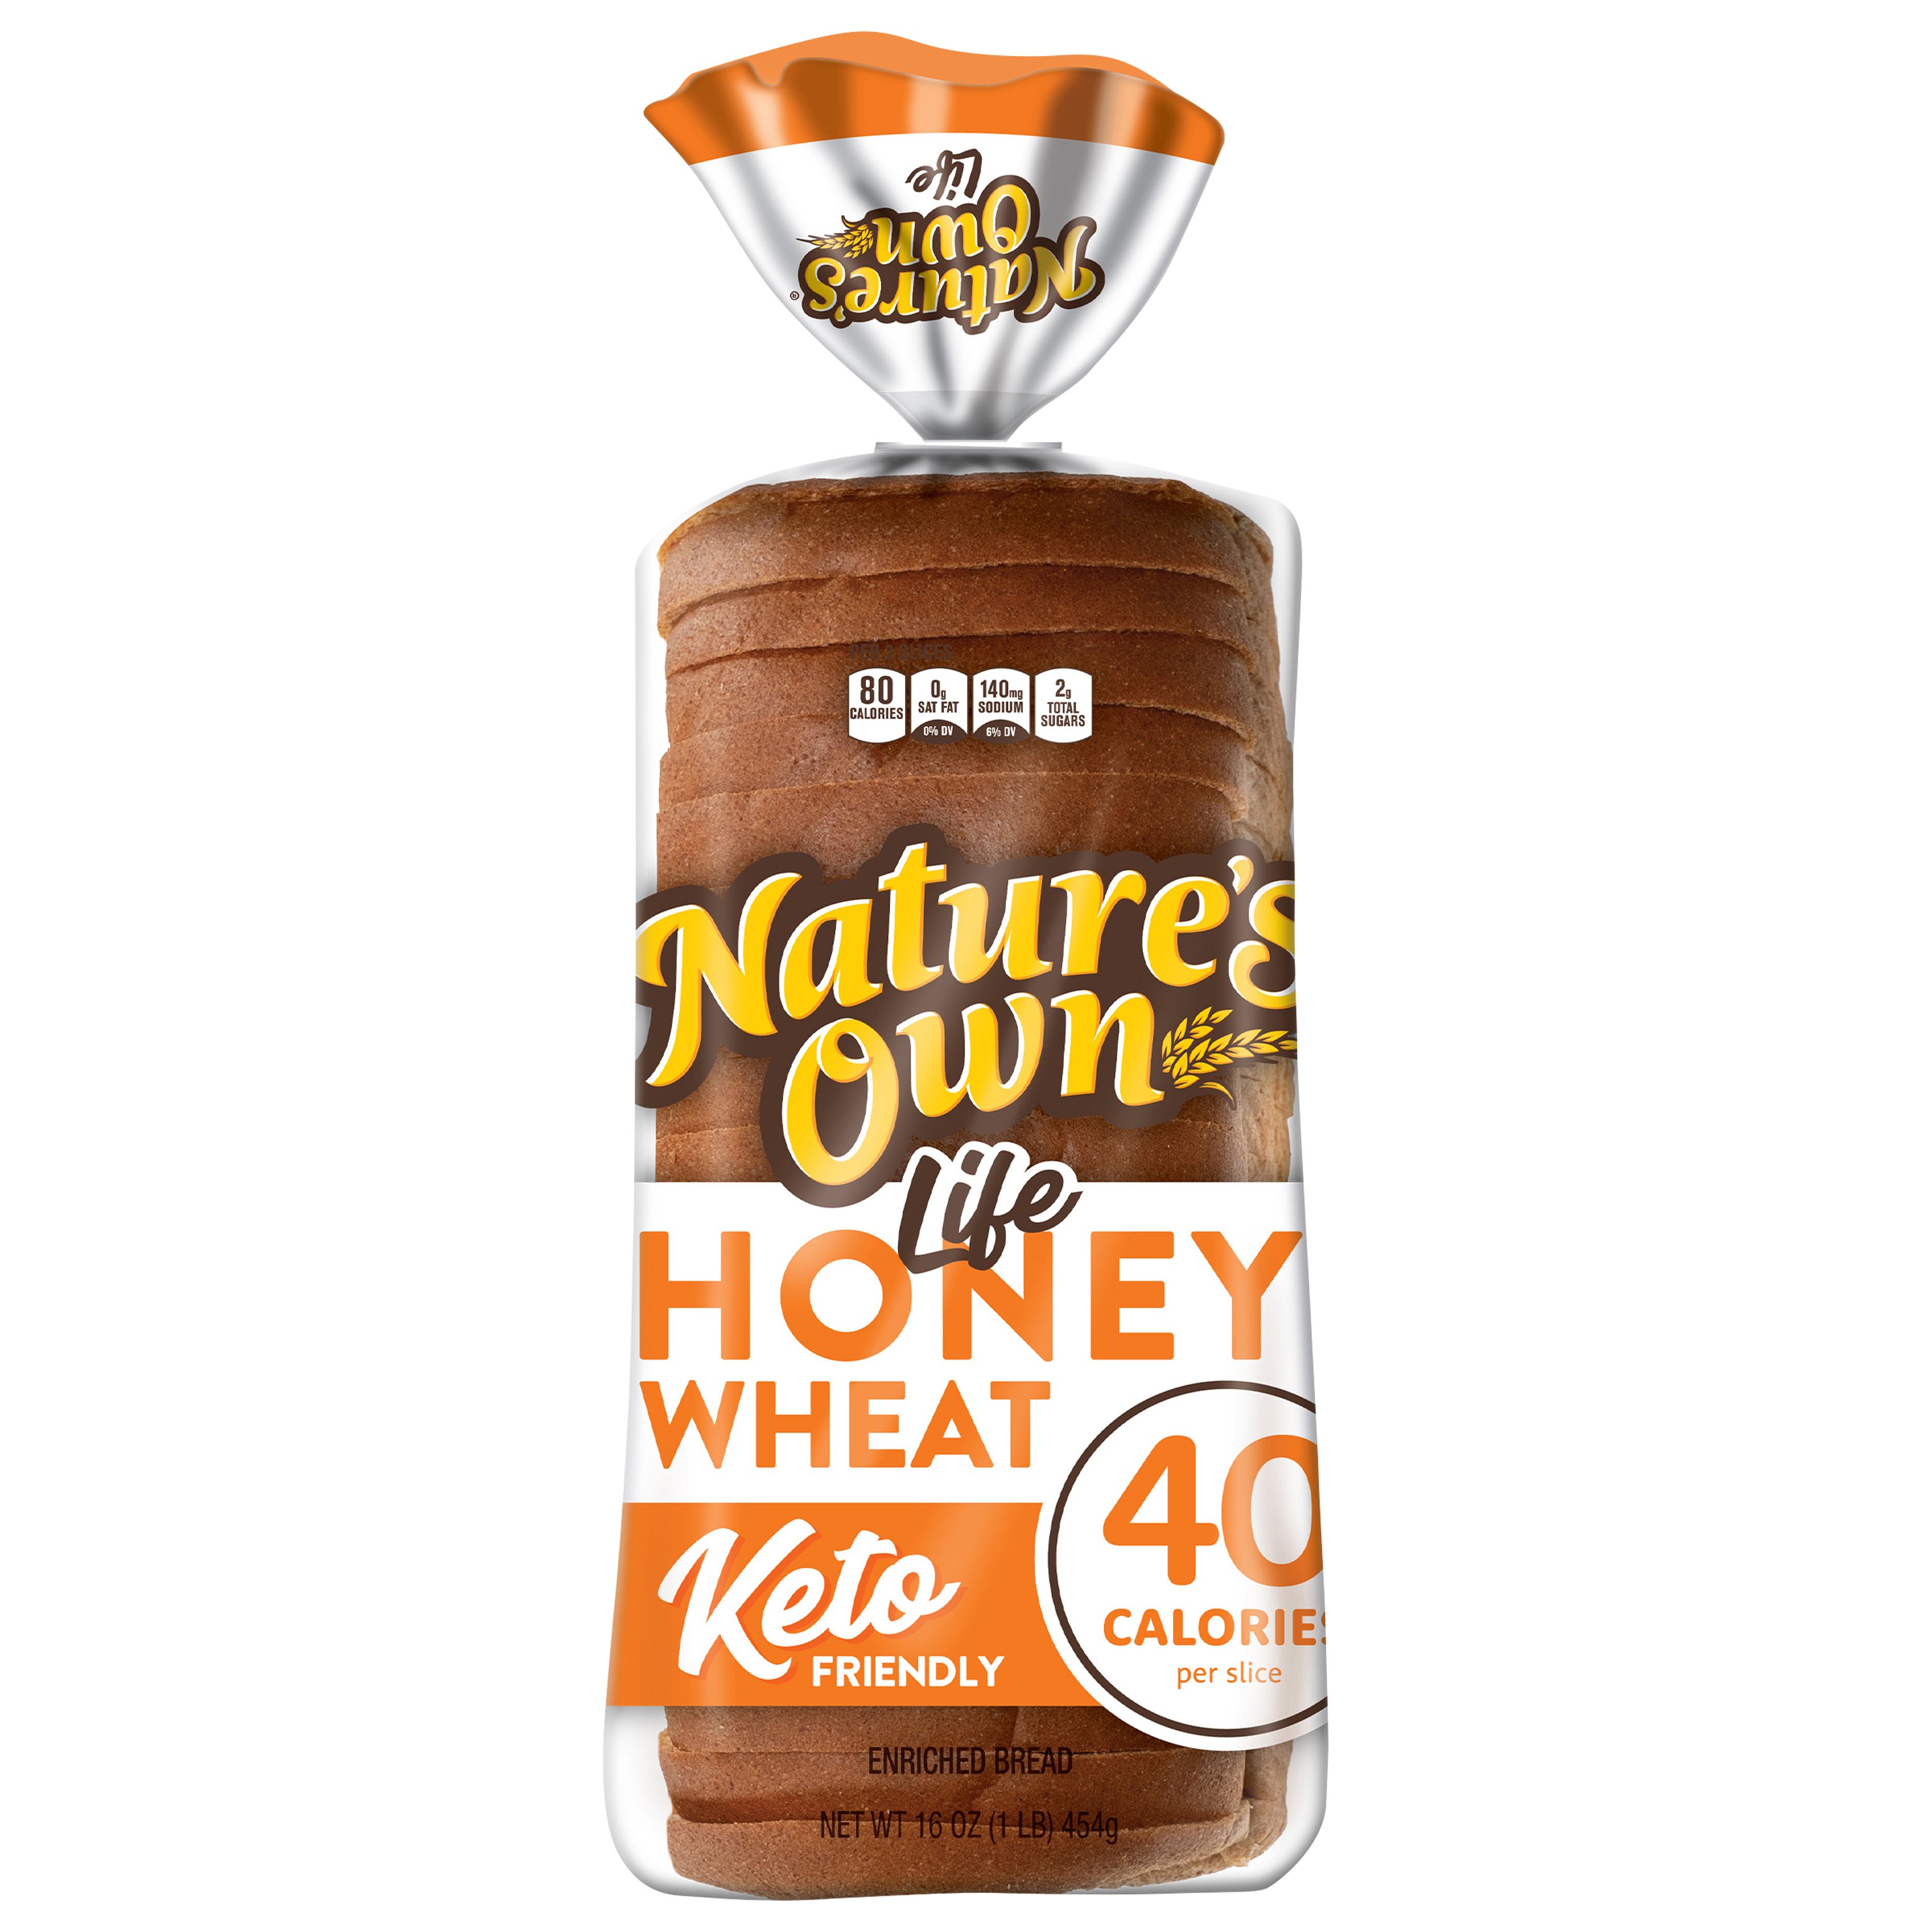 Nature S Own Life 40 Calorie Honey Wheat Bread Shop Bread At H E B.